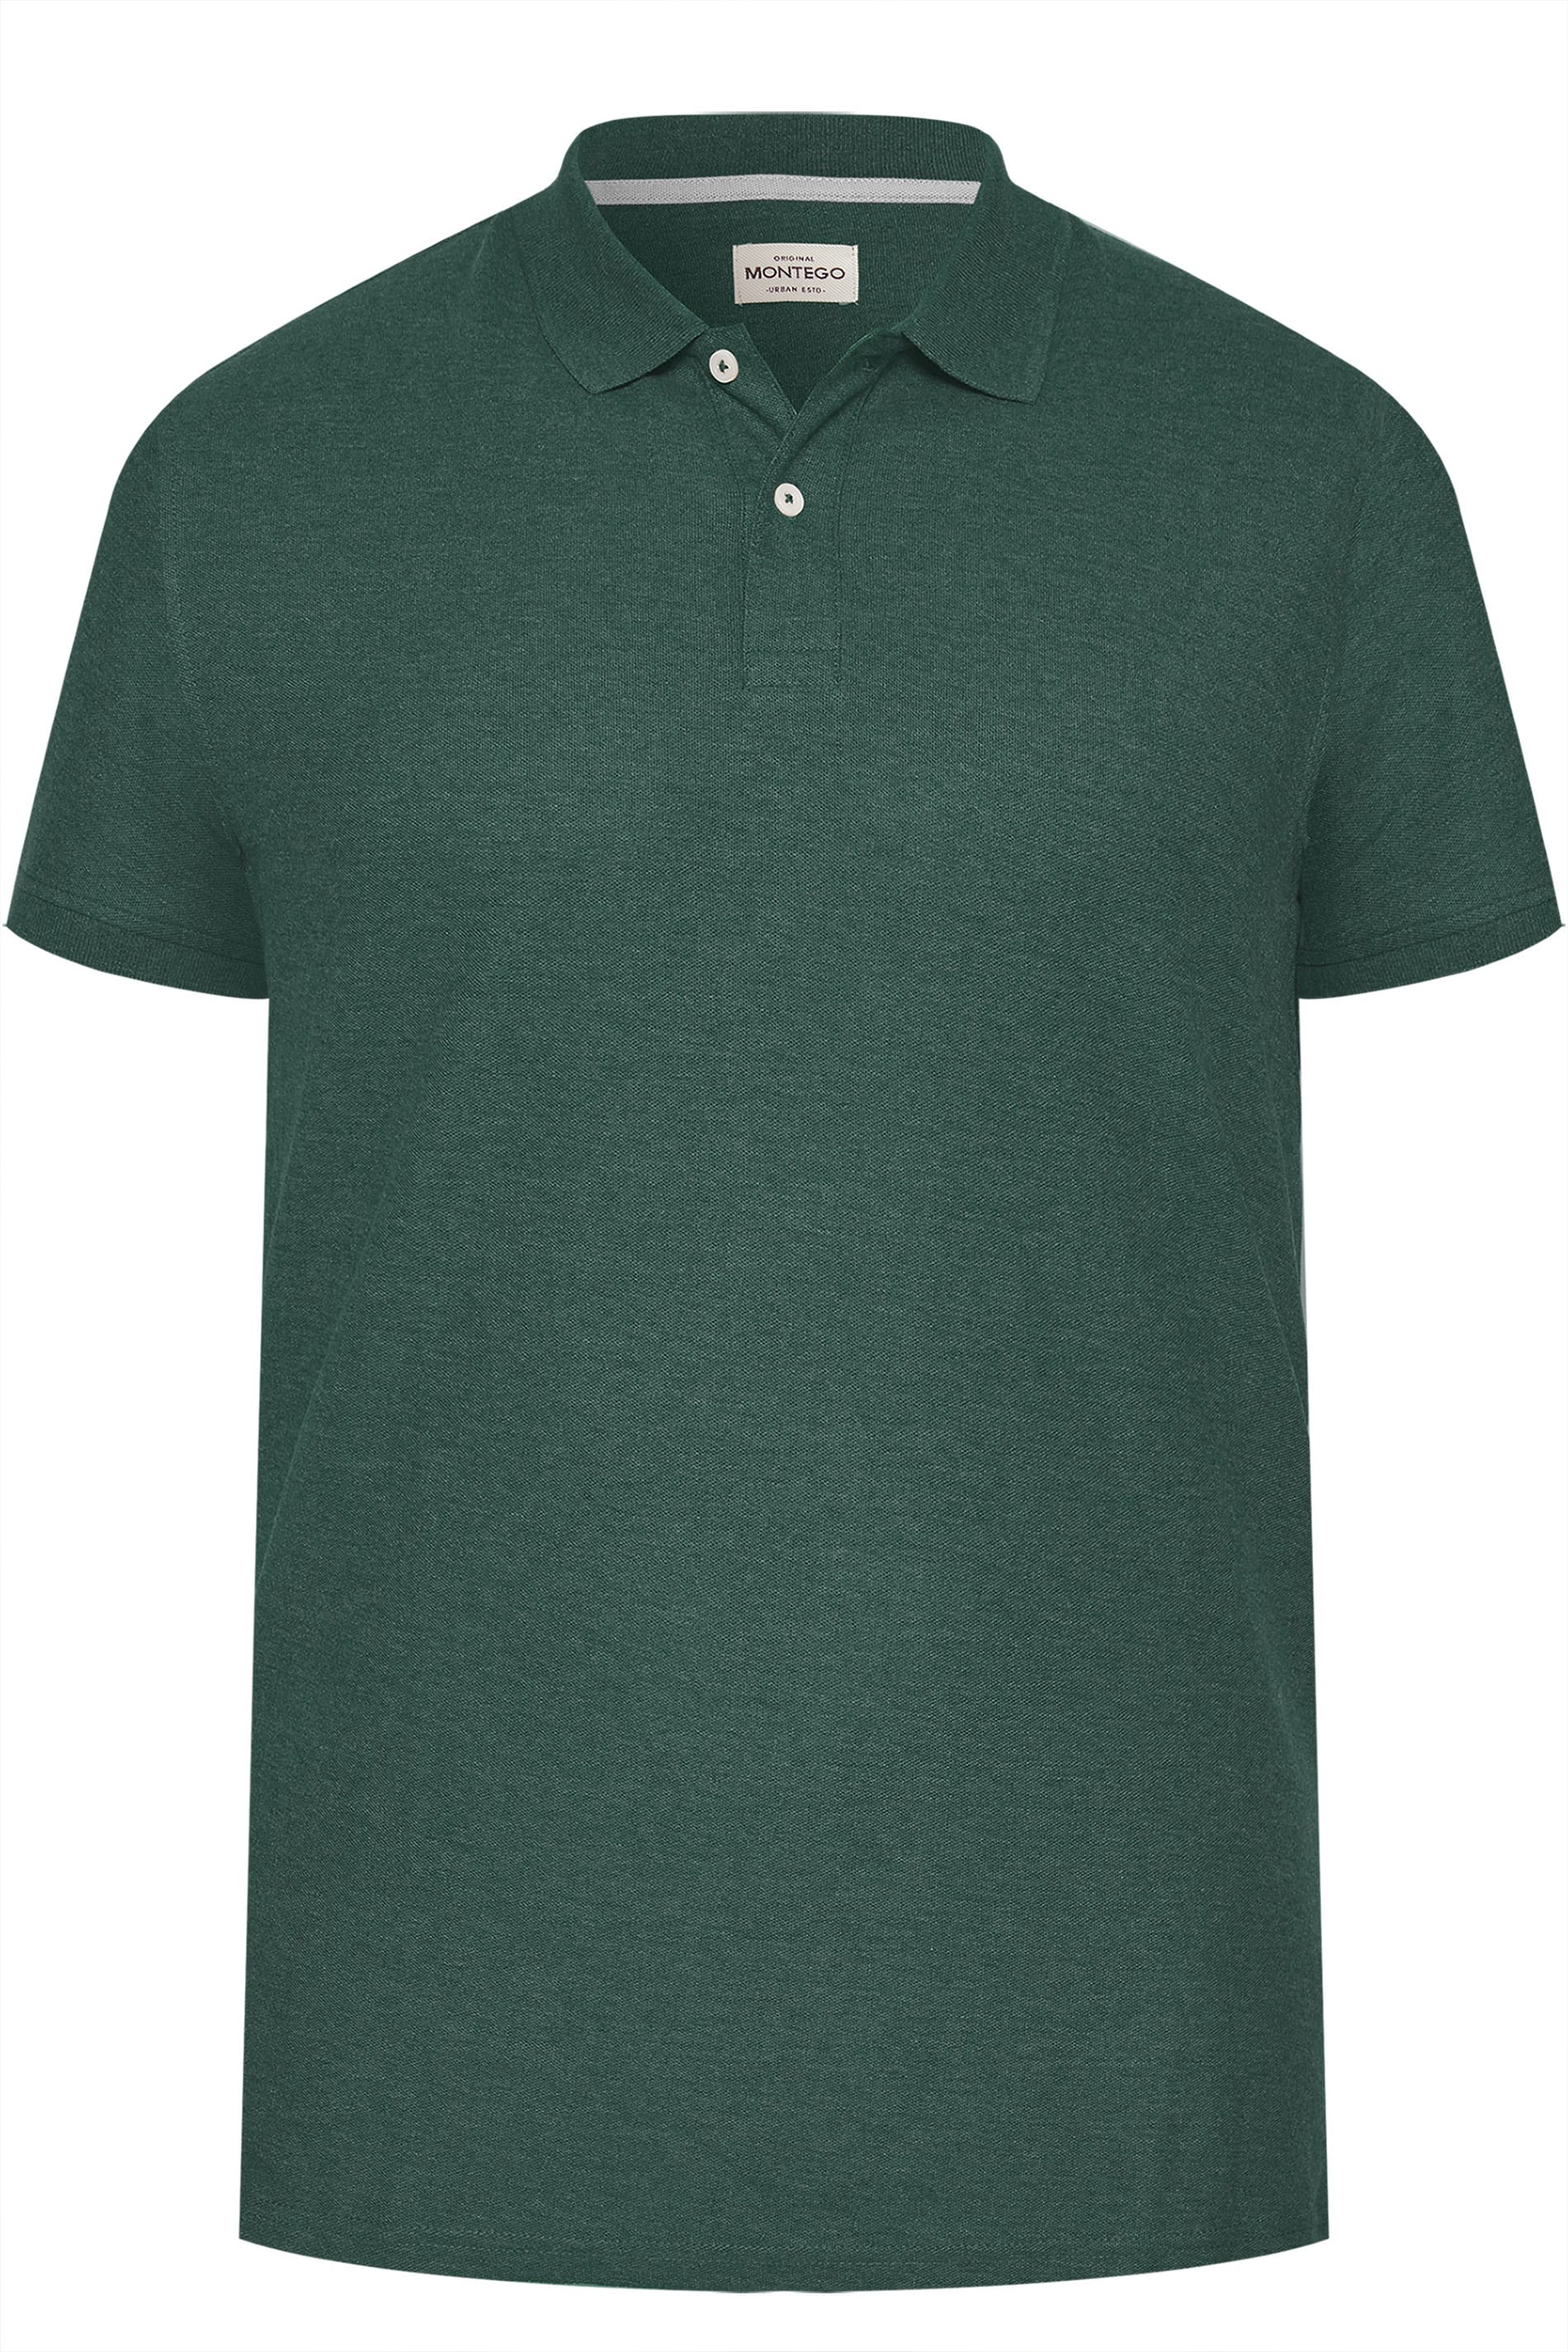 MONTEGO Dark Green Polo Shirt | Sizes Medium - 8XL | BadRhino